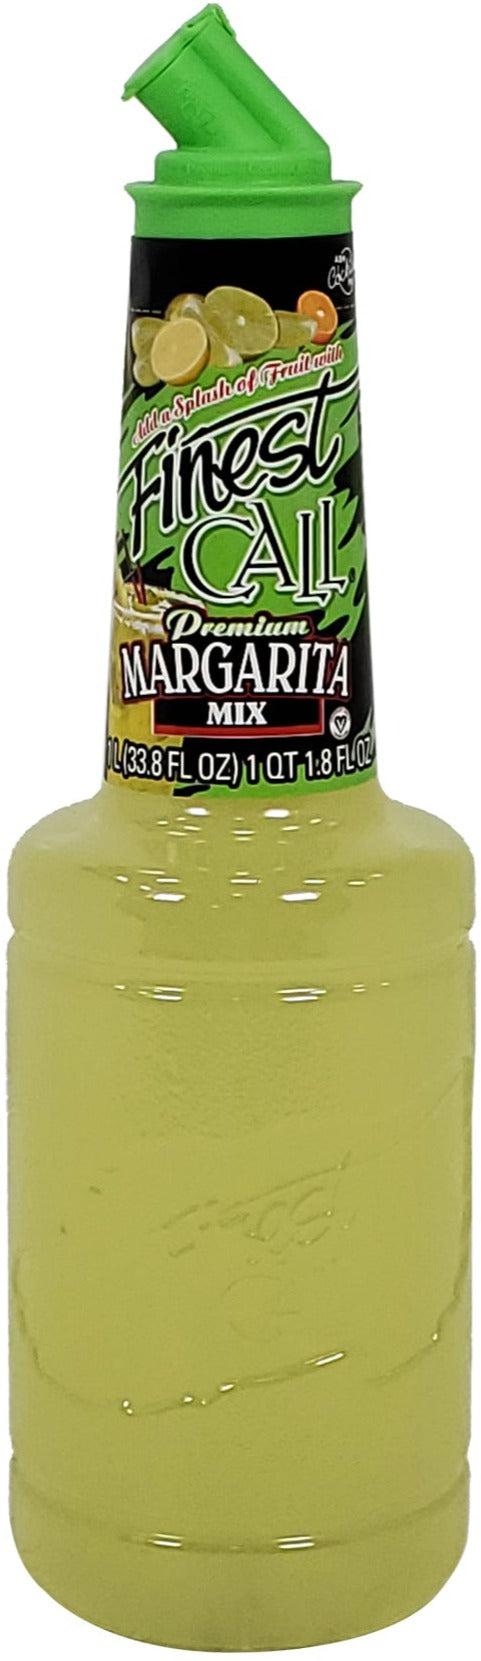 Finest Call Margarita